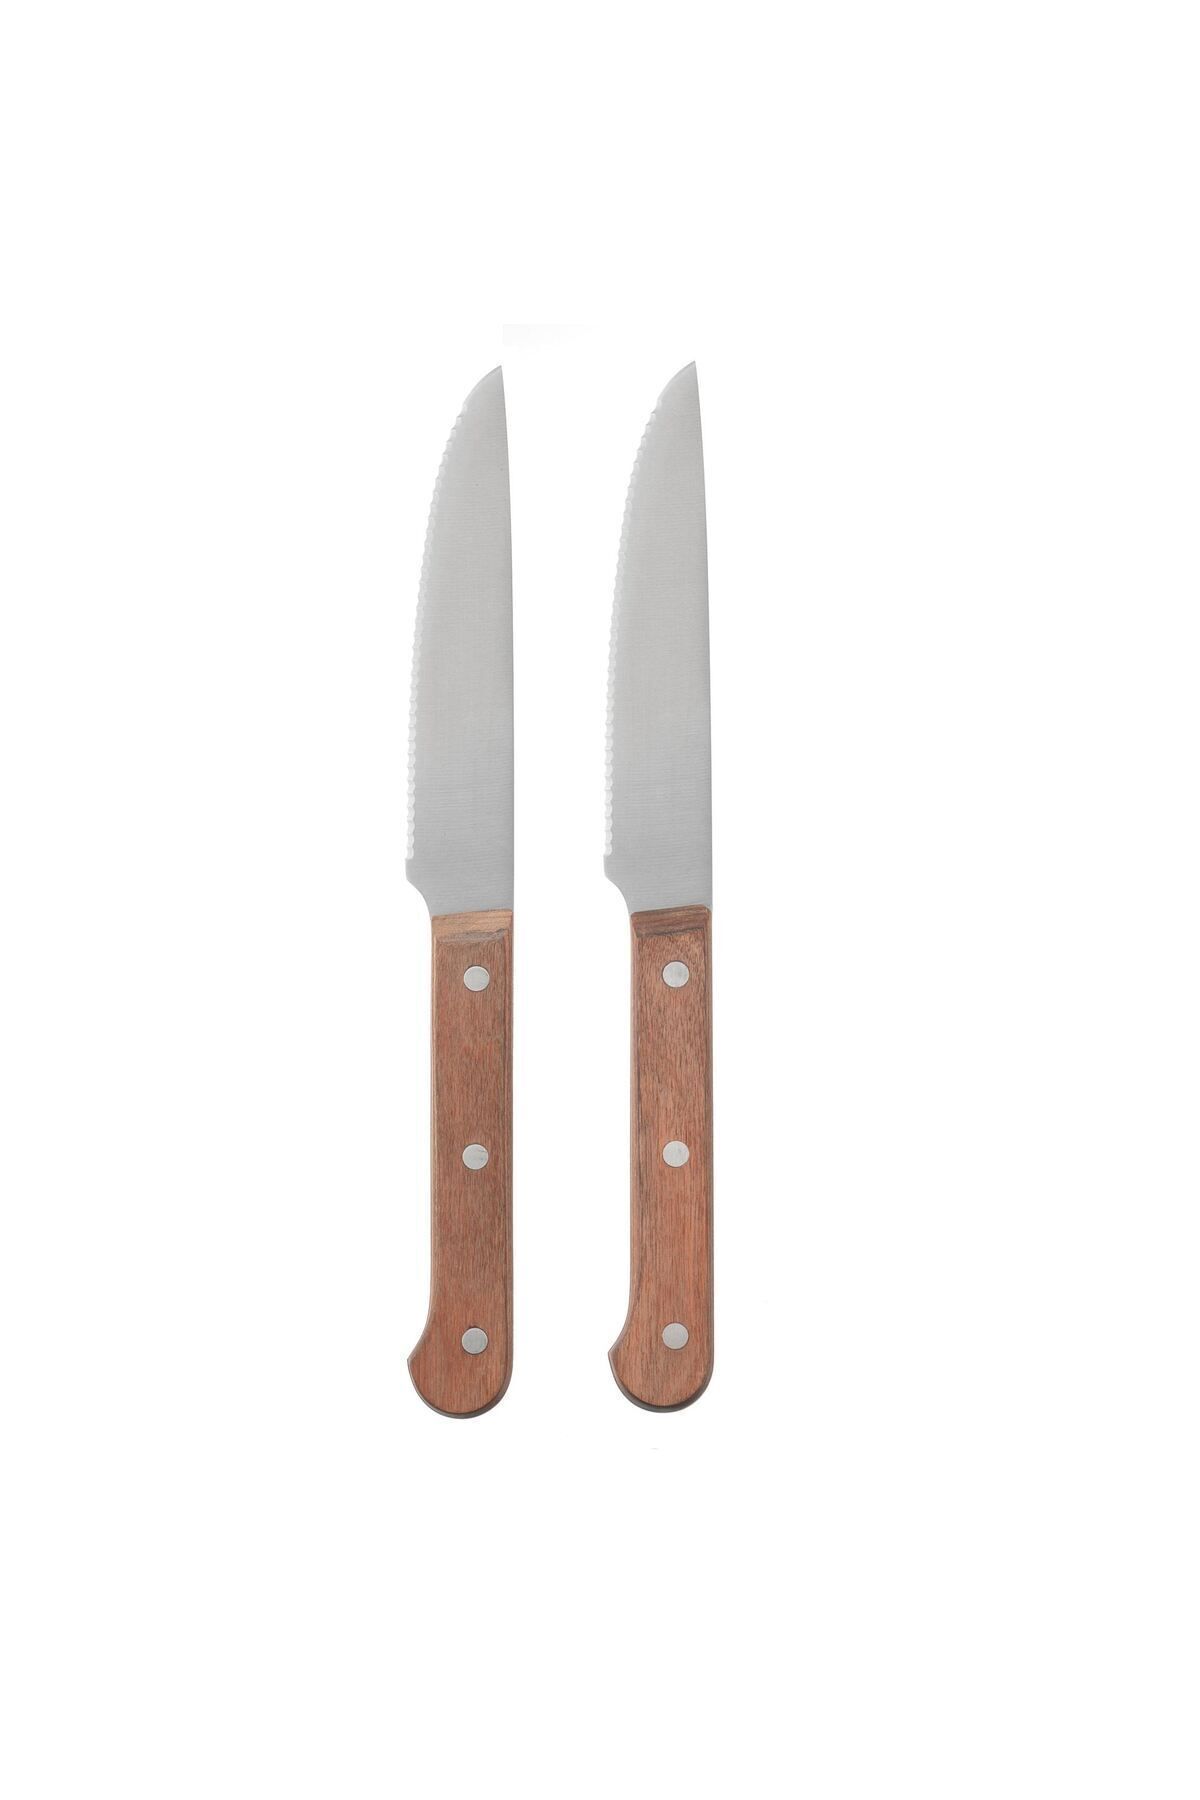 IKEA LINDRIG biftek bıçağı seti, koyu kahve, 24 cm, 2 adet